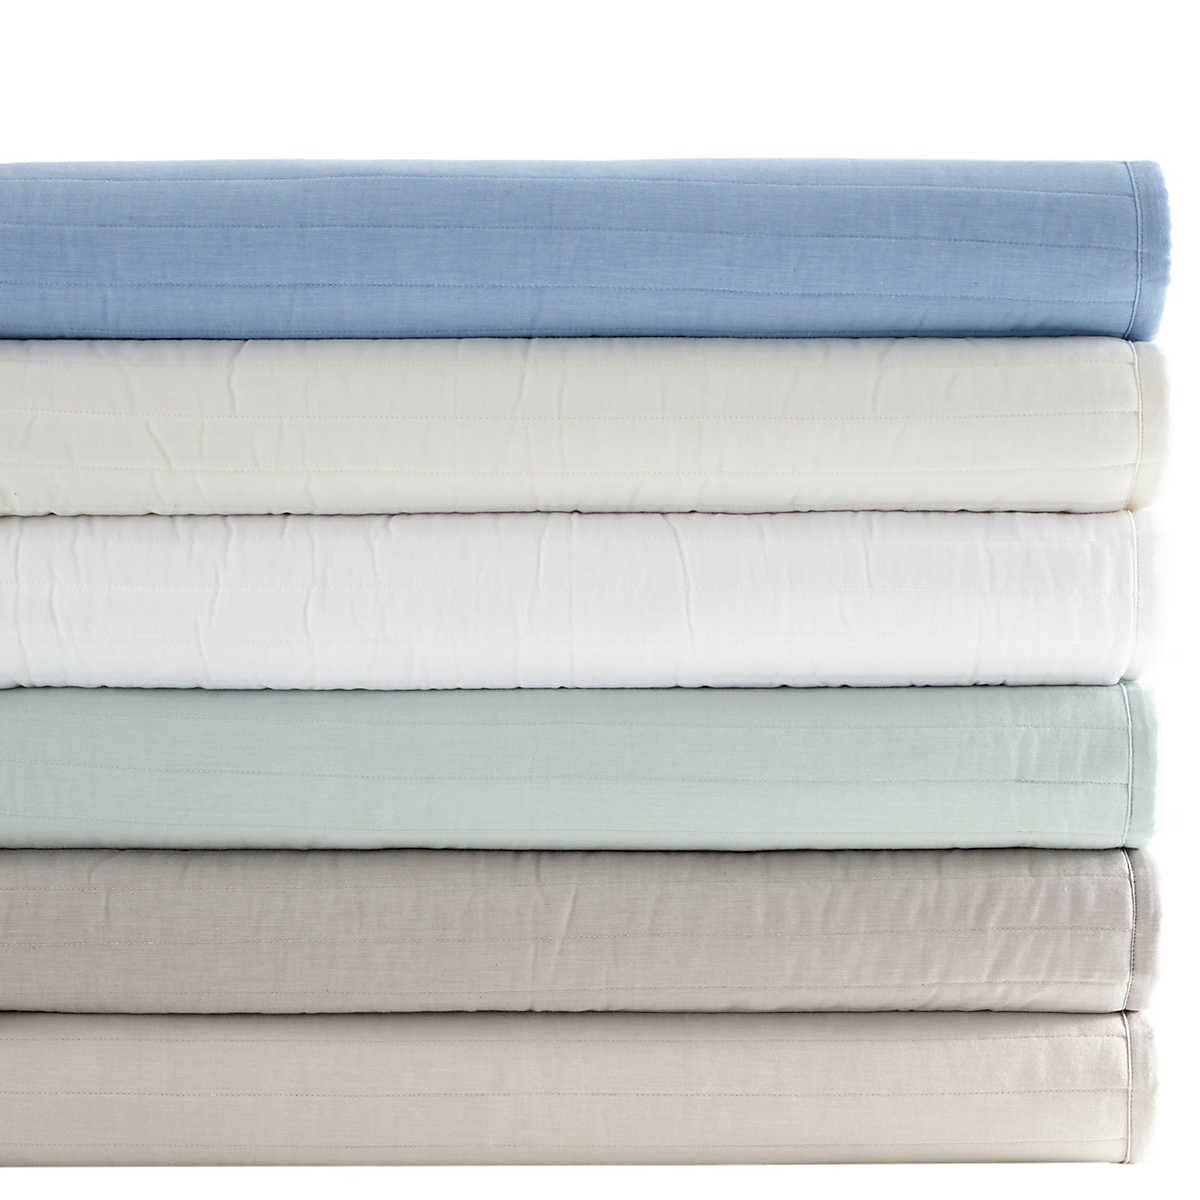 Cozy Cotton Dove Grey Quilt Comforters, Quilts & Coverlets 